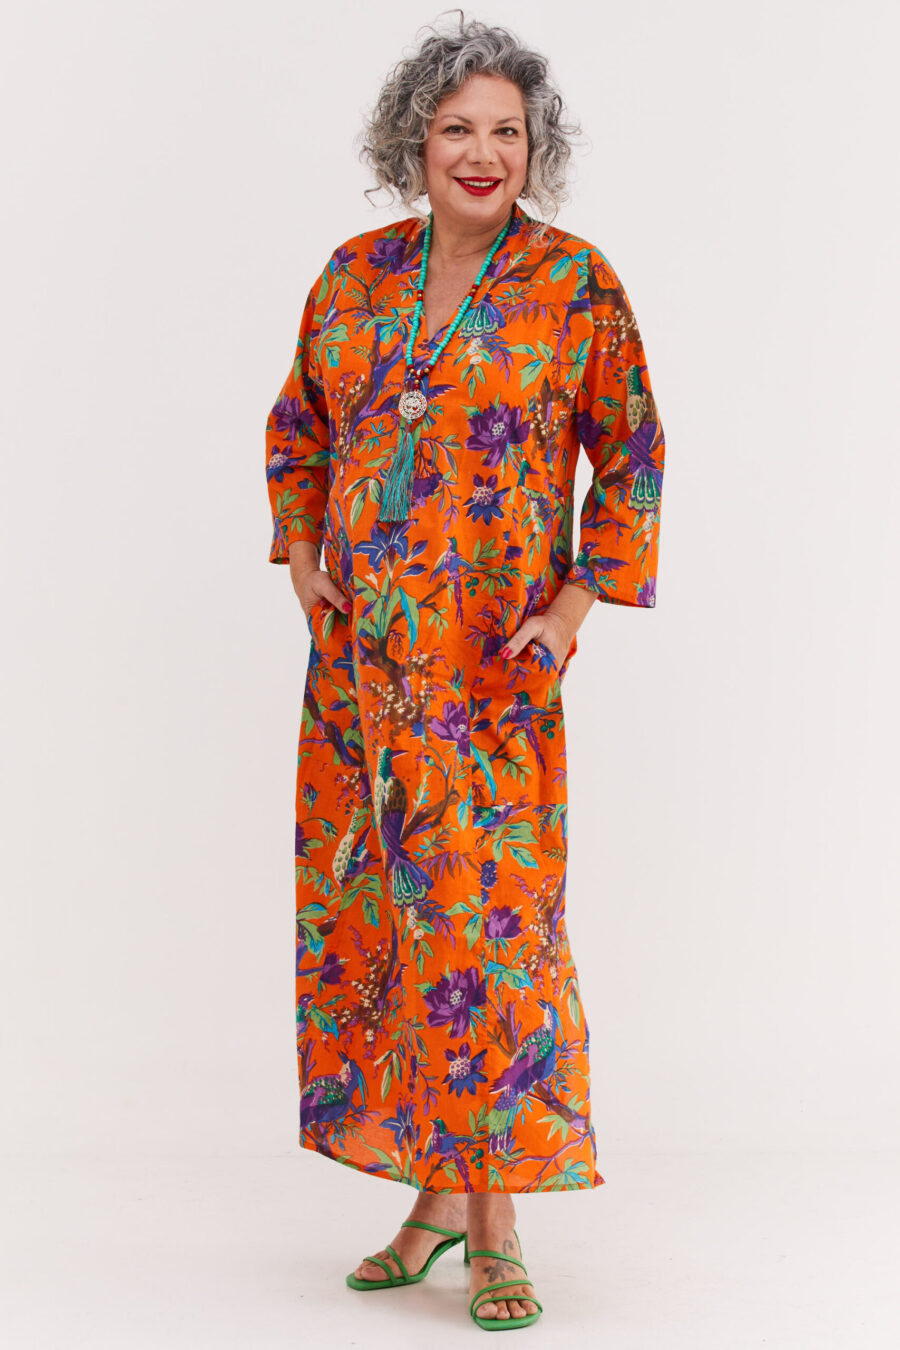 Jalabiya dress | Uniquely designed dress - Orange tropicana, colorful tropical print on an orange backgroung by comfort zone boutique